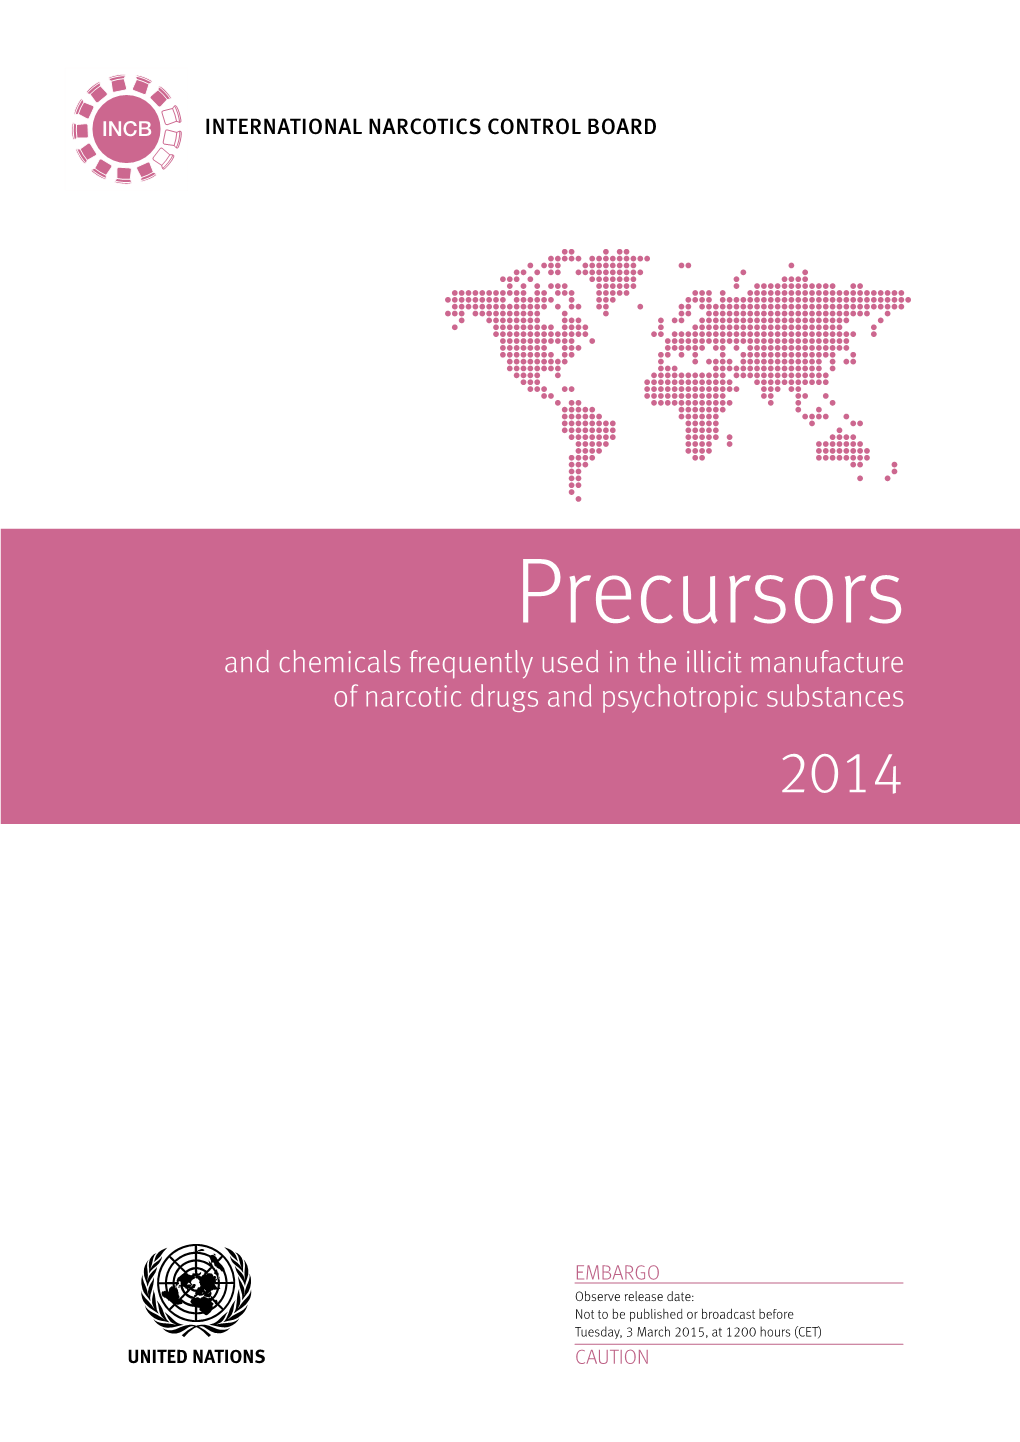 2014 Report on Precursor Chemicals